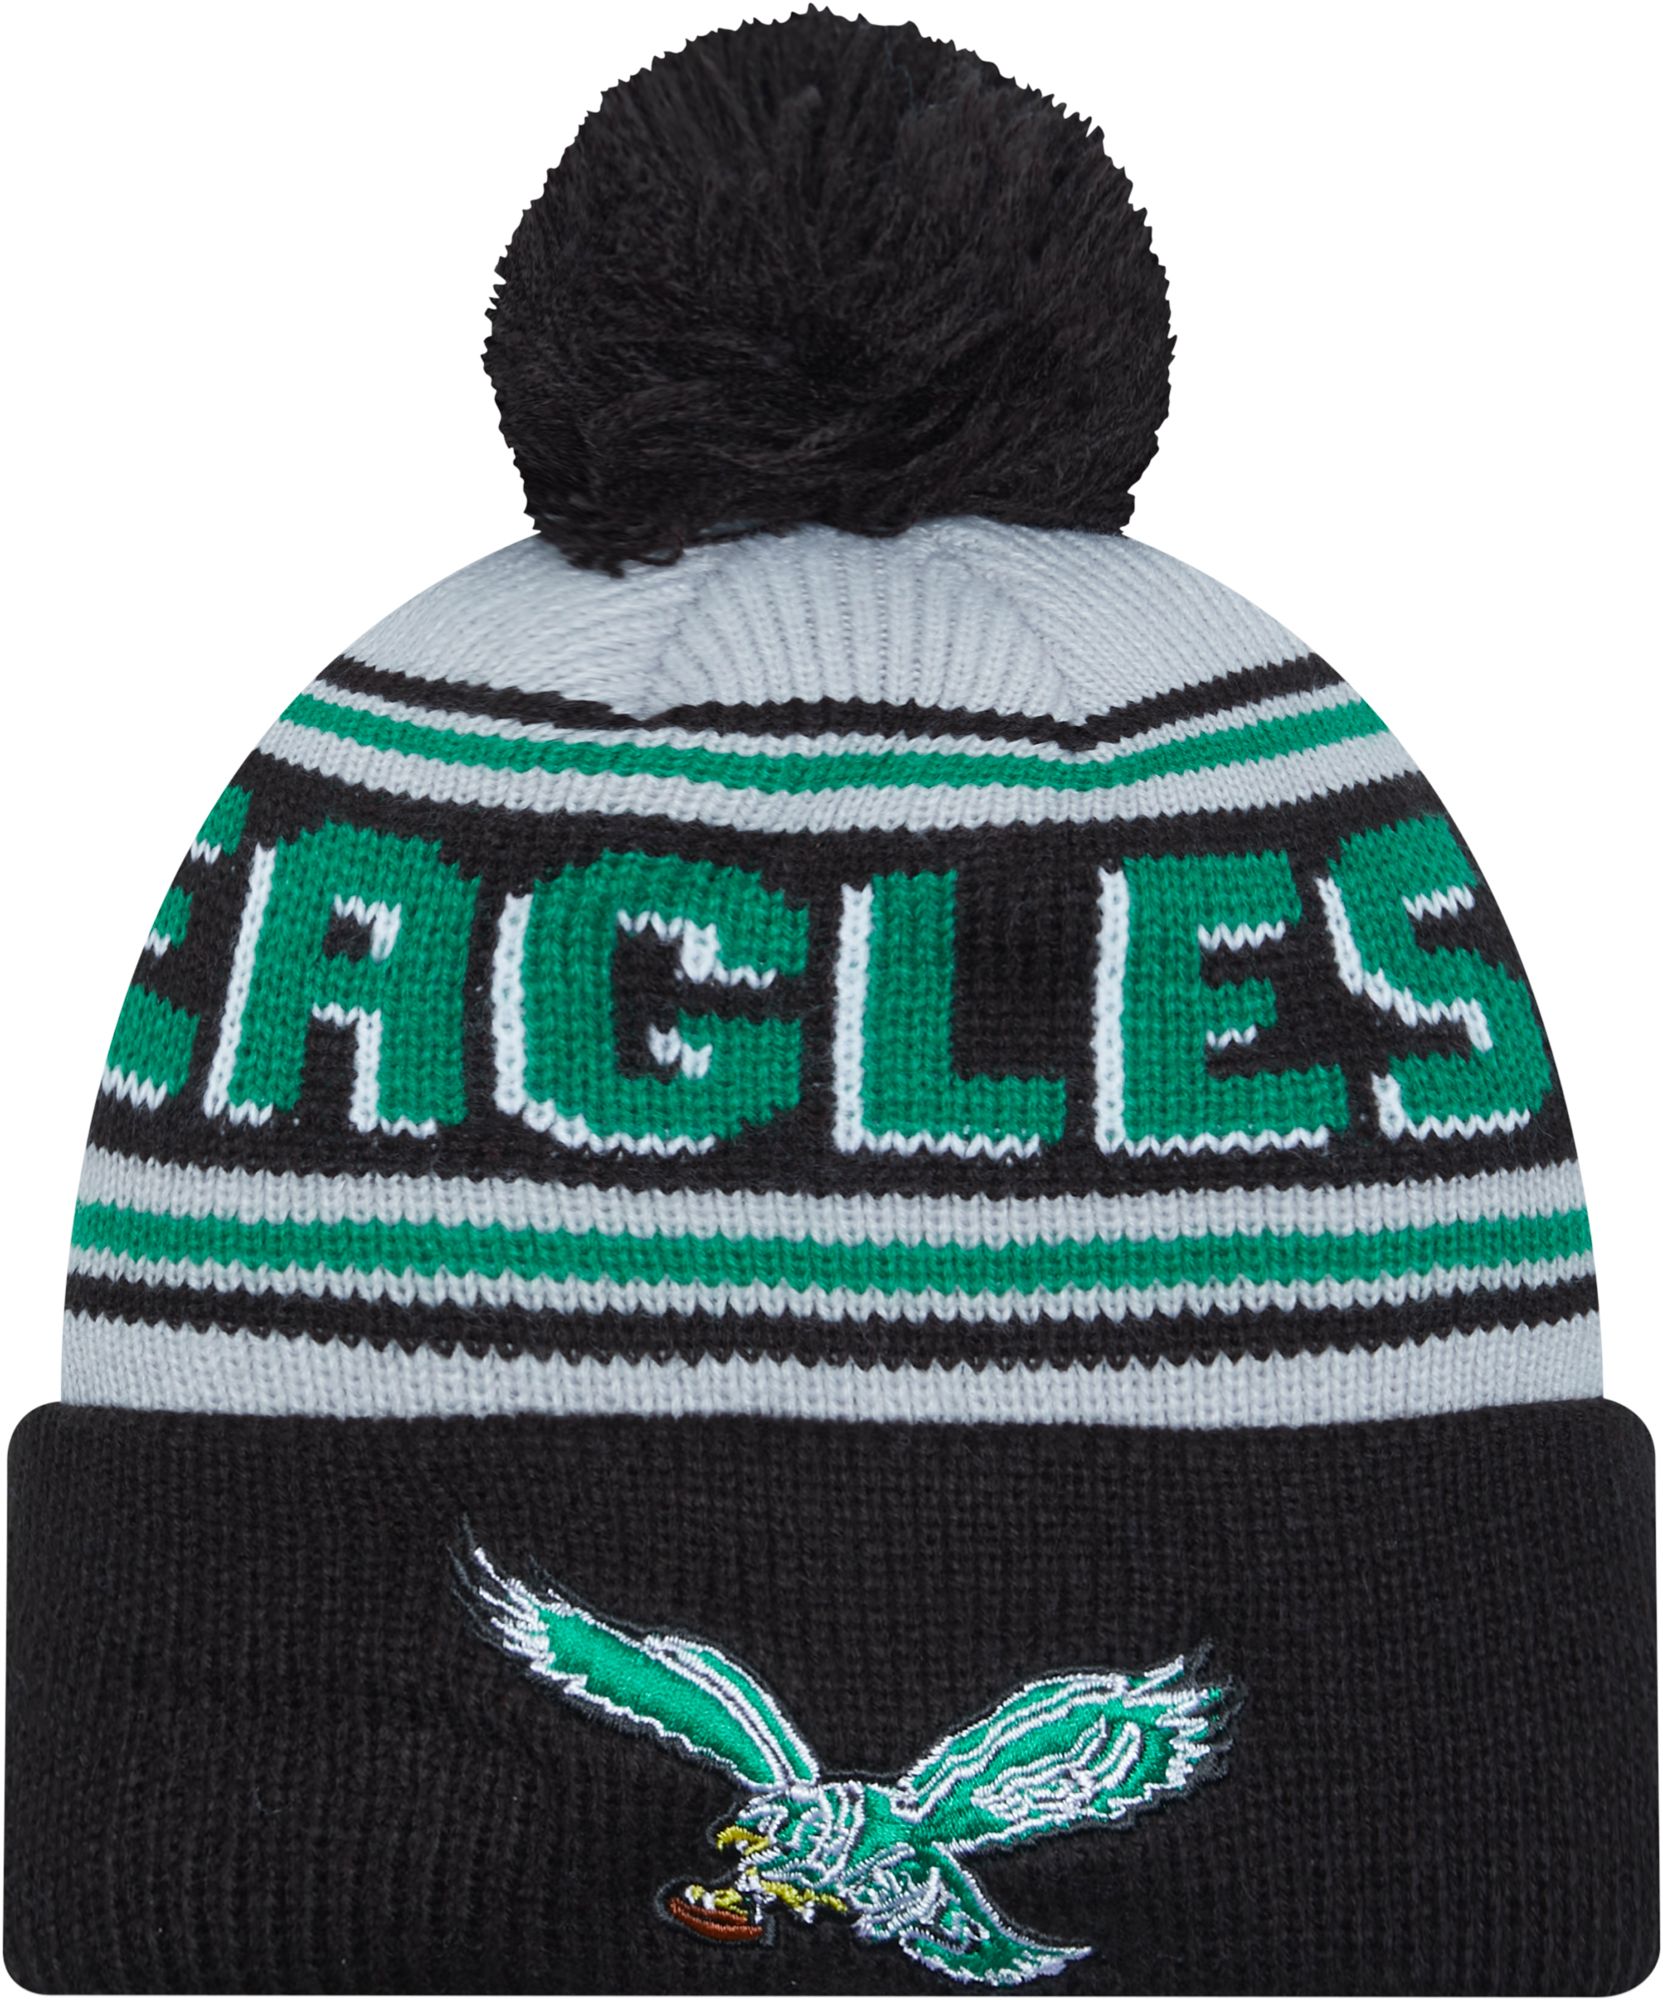 Philadelphia Eagles infant hat